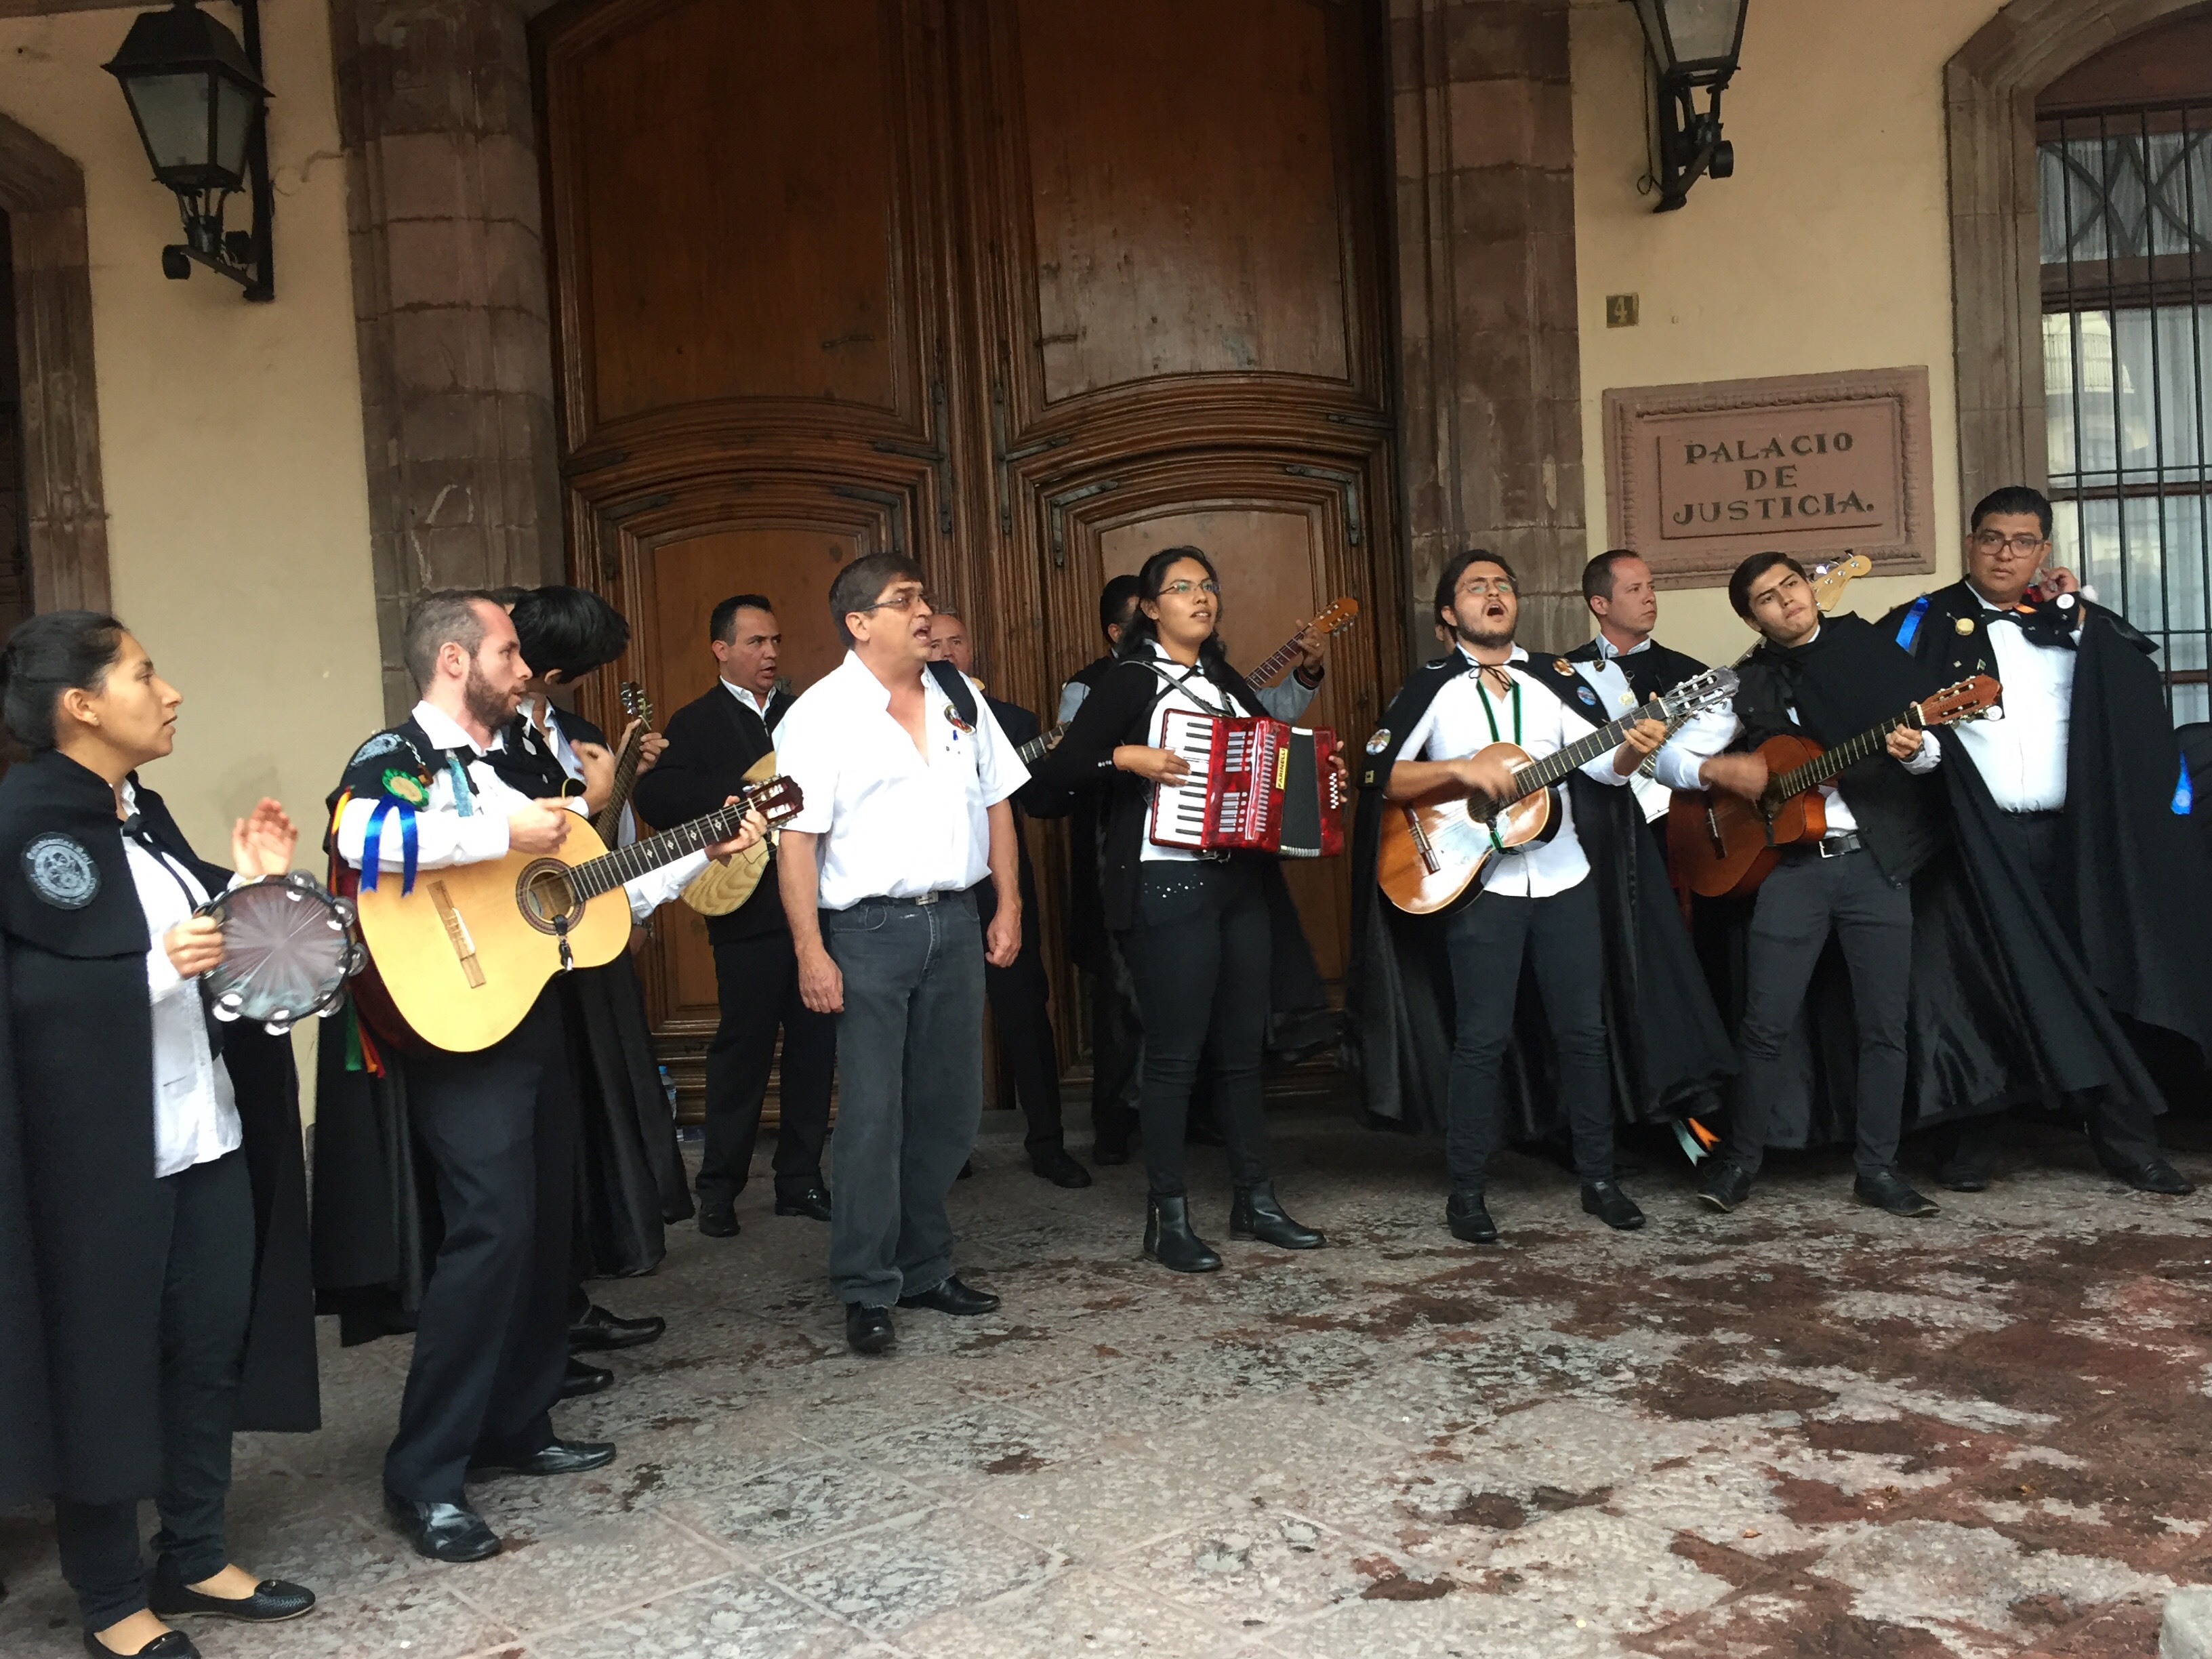  Estudiantina Real Santiago de Querétaro organiza concierto en Plaza de Armas para apoyar a damnificados en Oaxaca